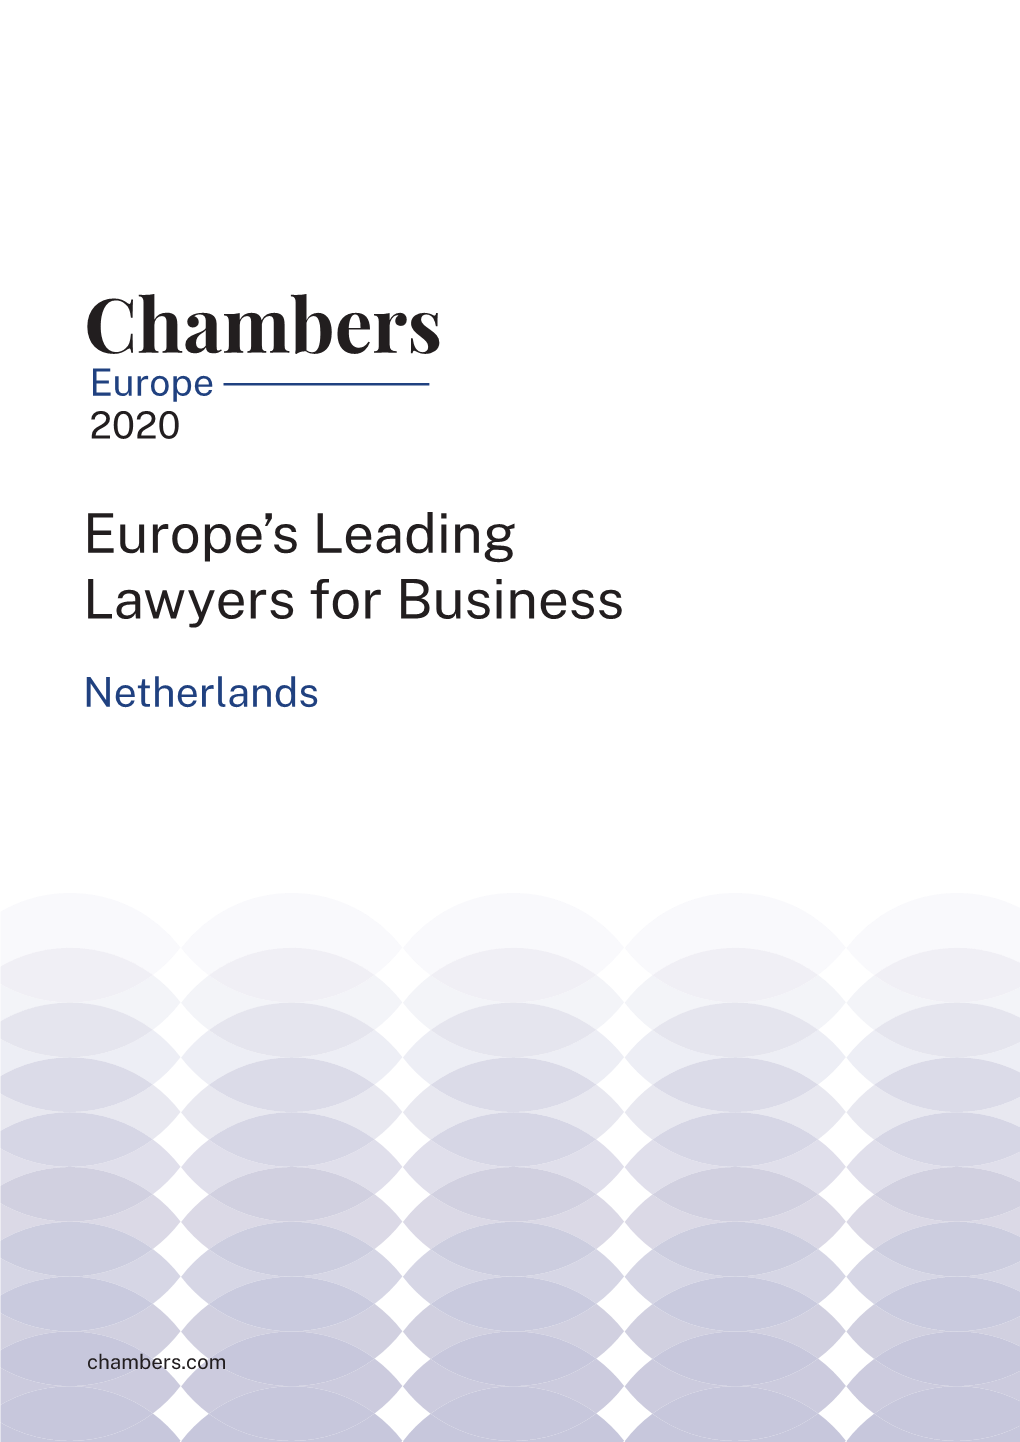 Chambers Europe 2020 Guide